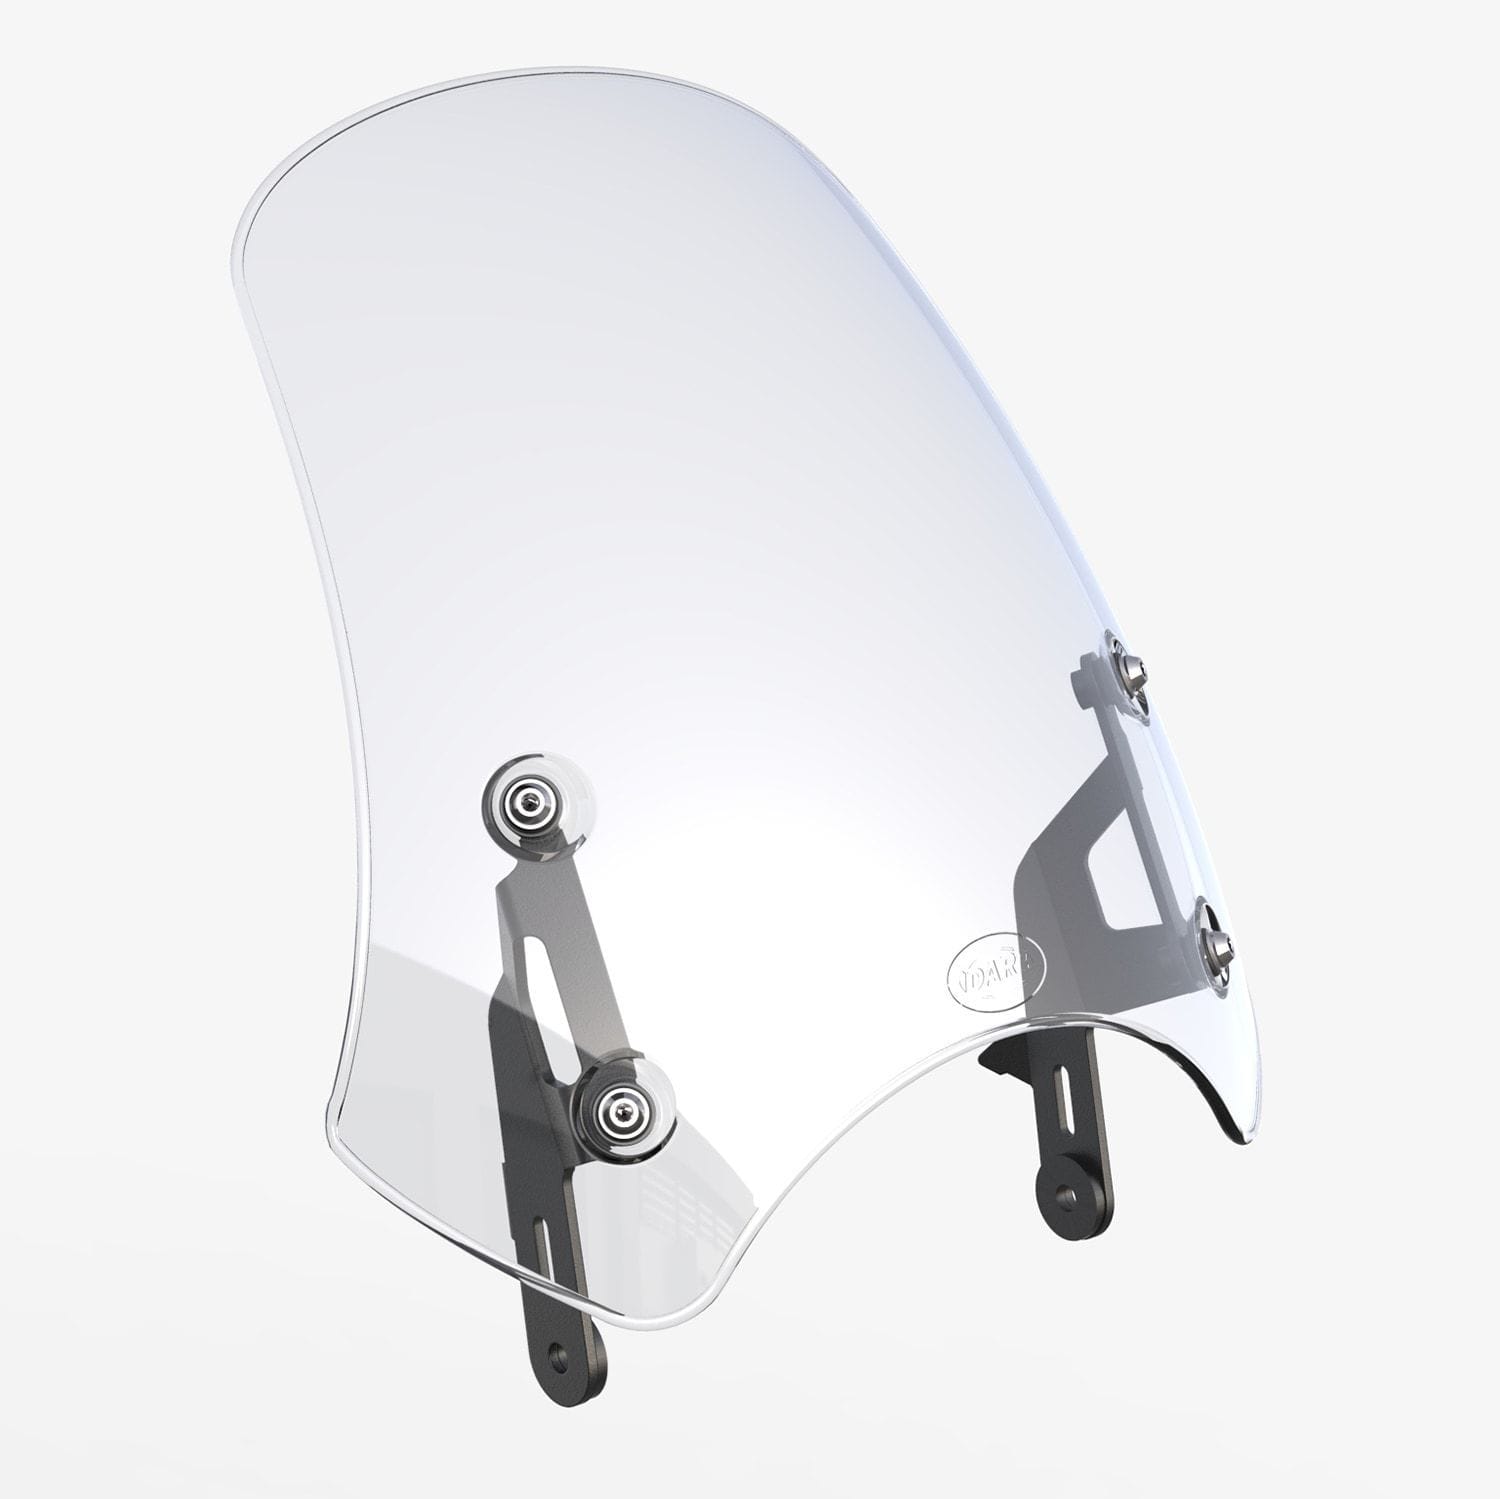 Moto Guzzi Audace - Marlin Marlin flyscreen Dart Flyscreen Windshield